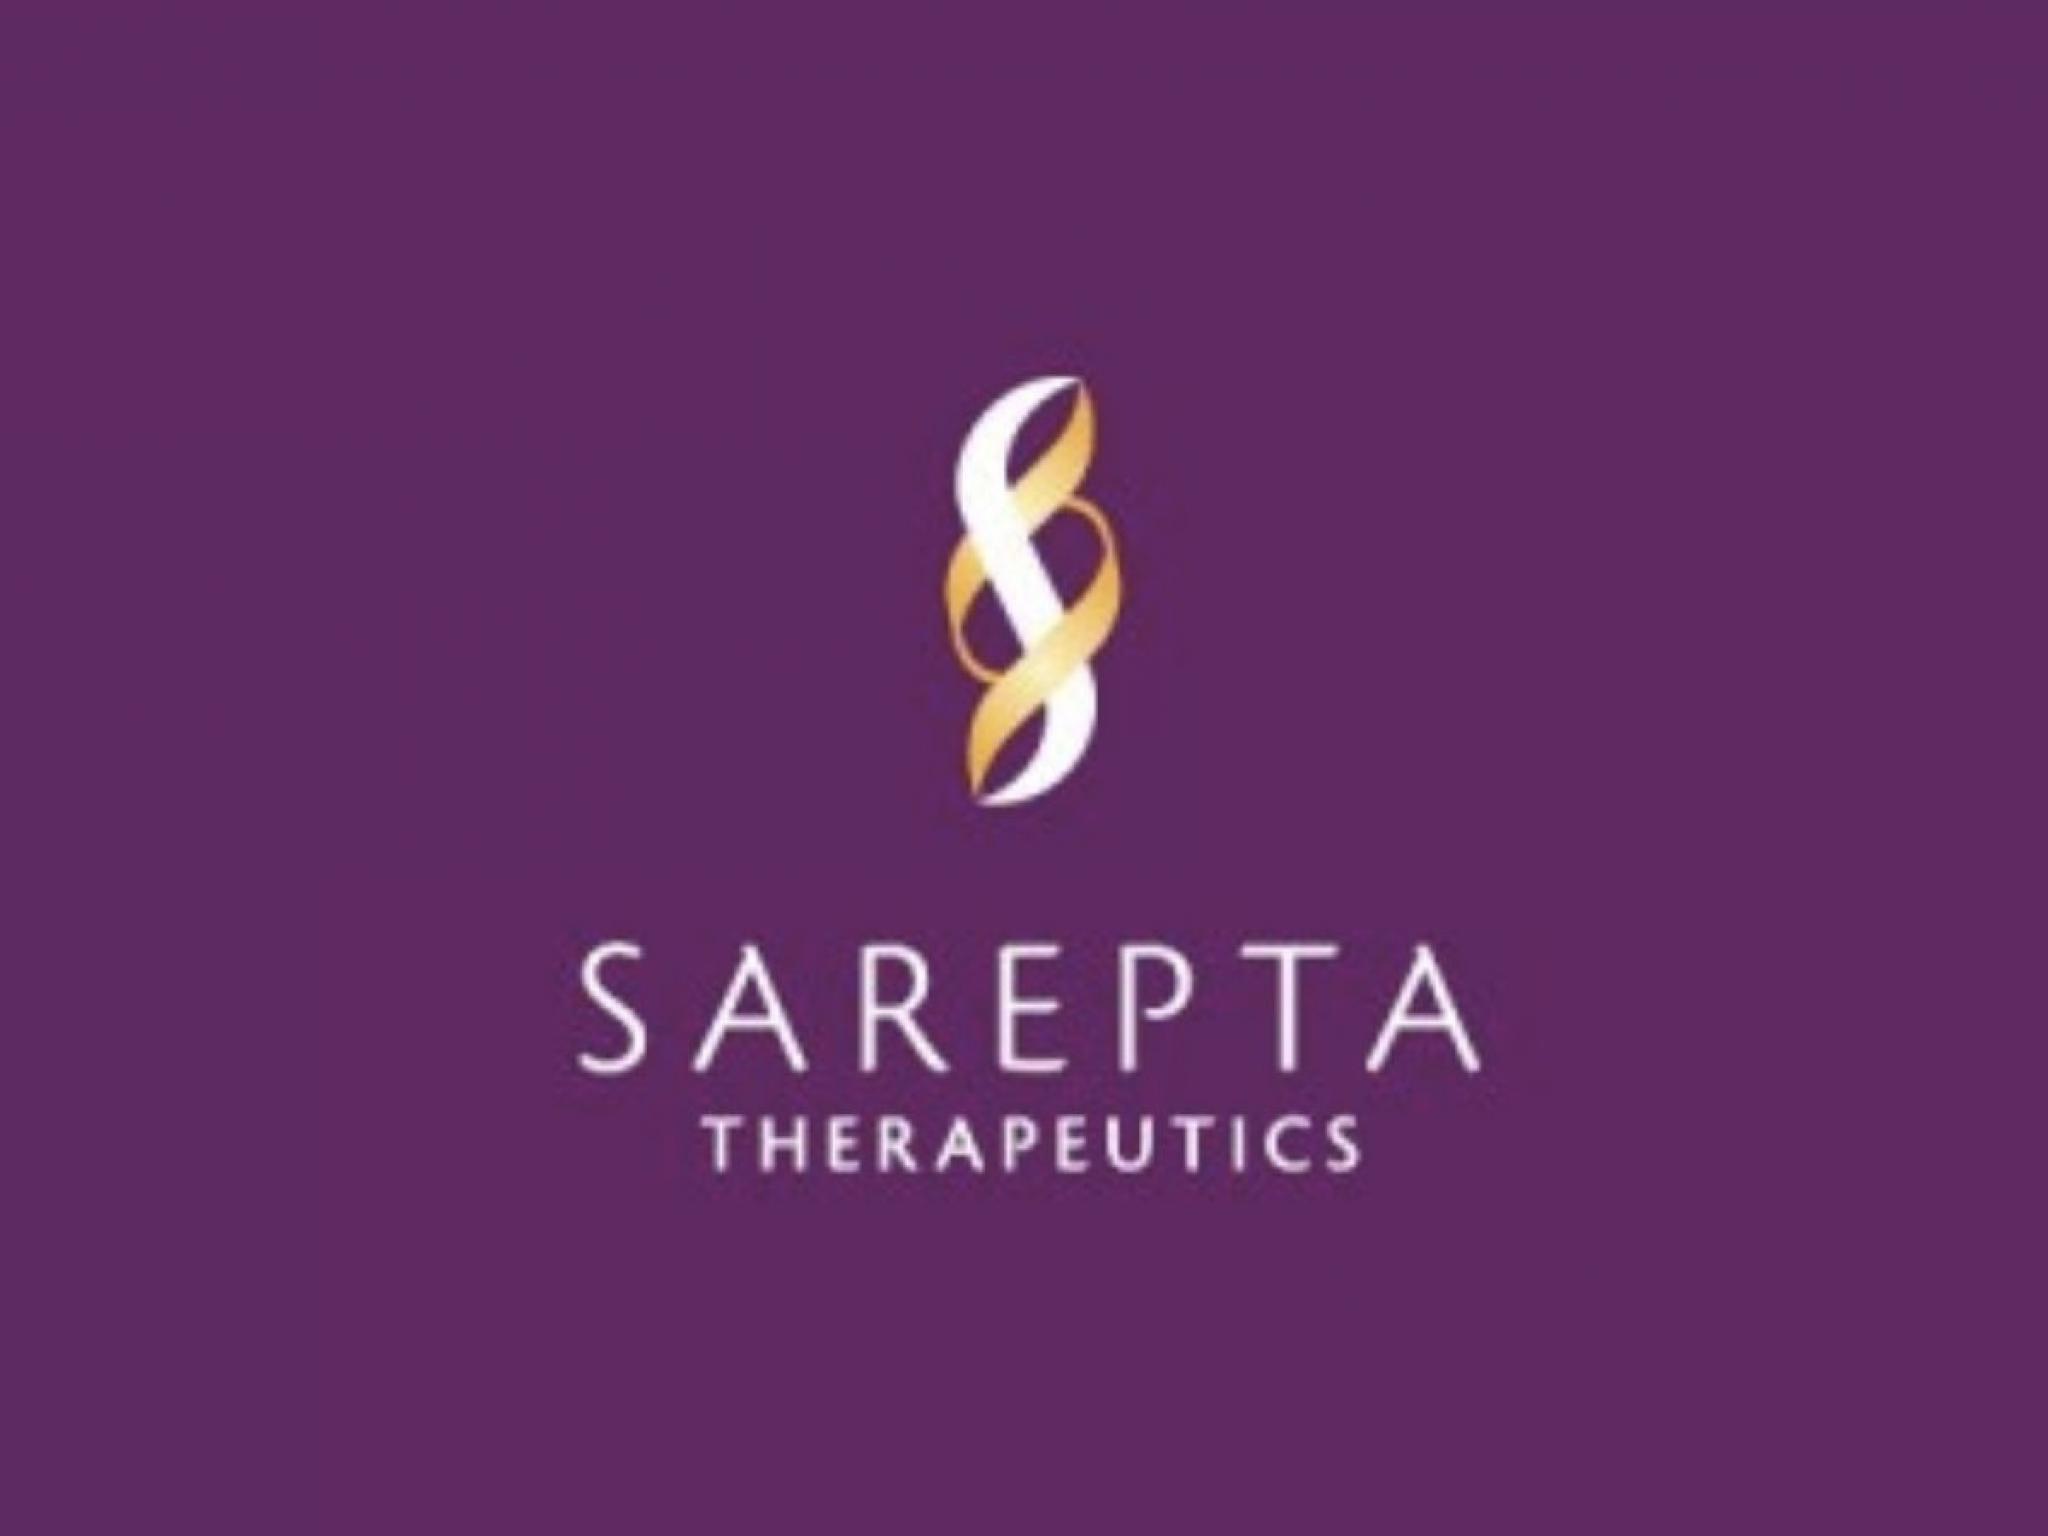  sarepta-therapeutics-c3ai-mondaycom-and-other-big-stocks-moving-higher-on-monday 